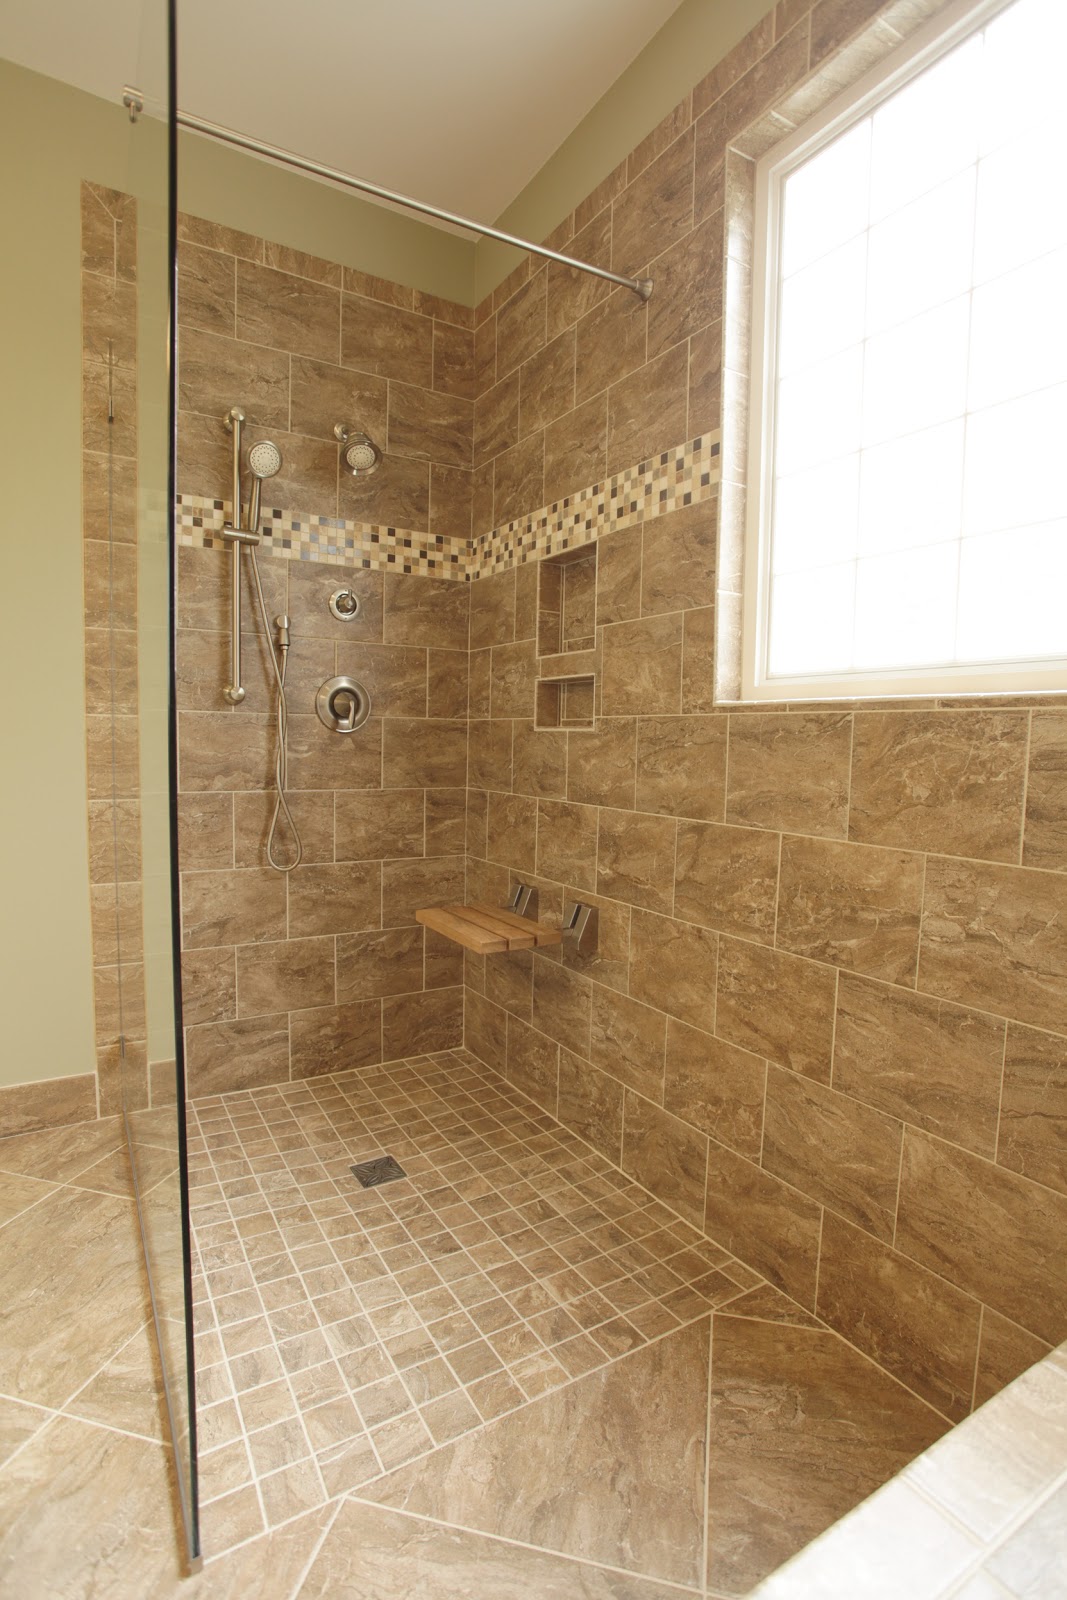 Bathroom Designs Shower Bath | Home Decorating IdeasBathroom Interior Design